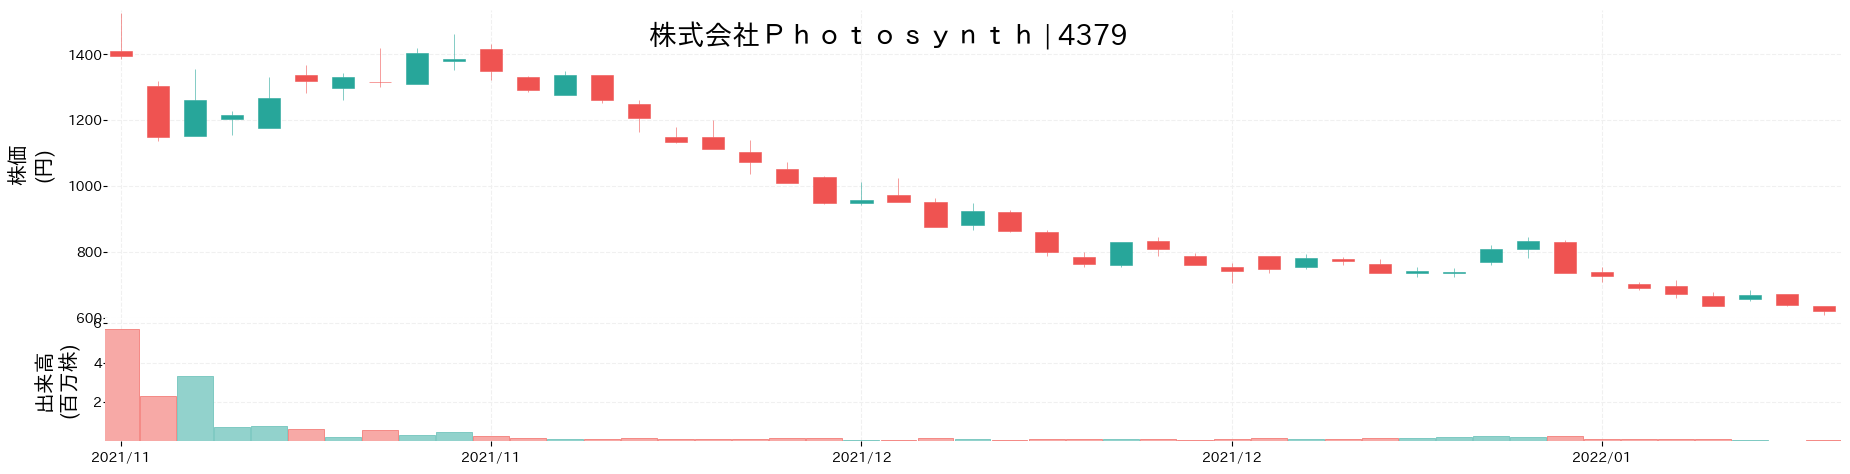 Photosynthの株価推移(2021)